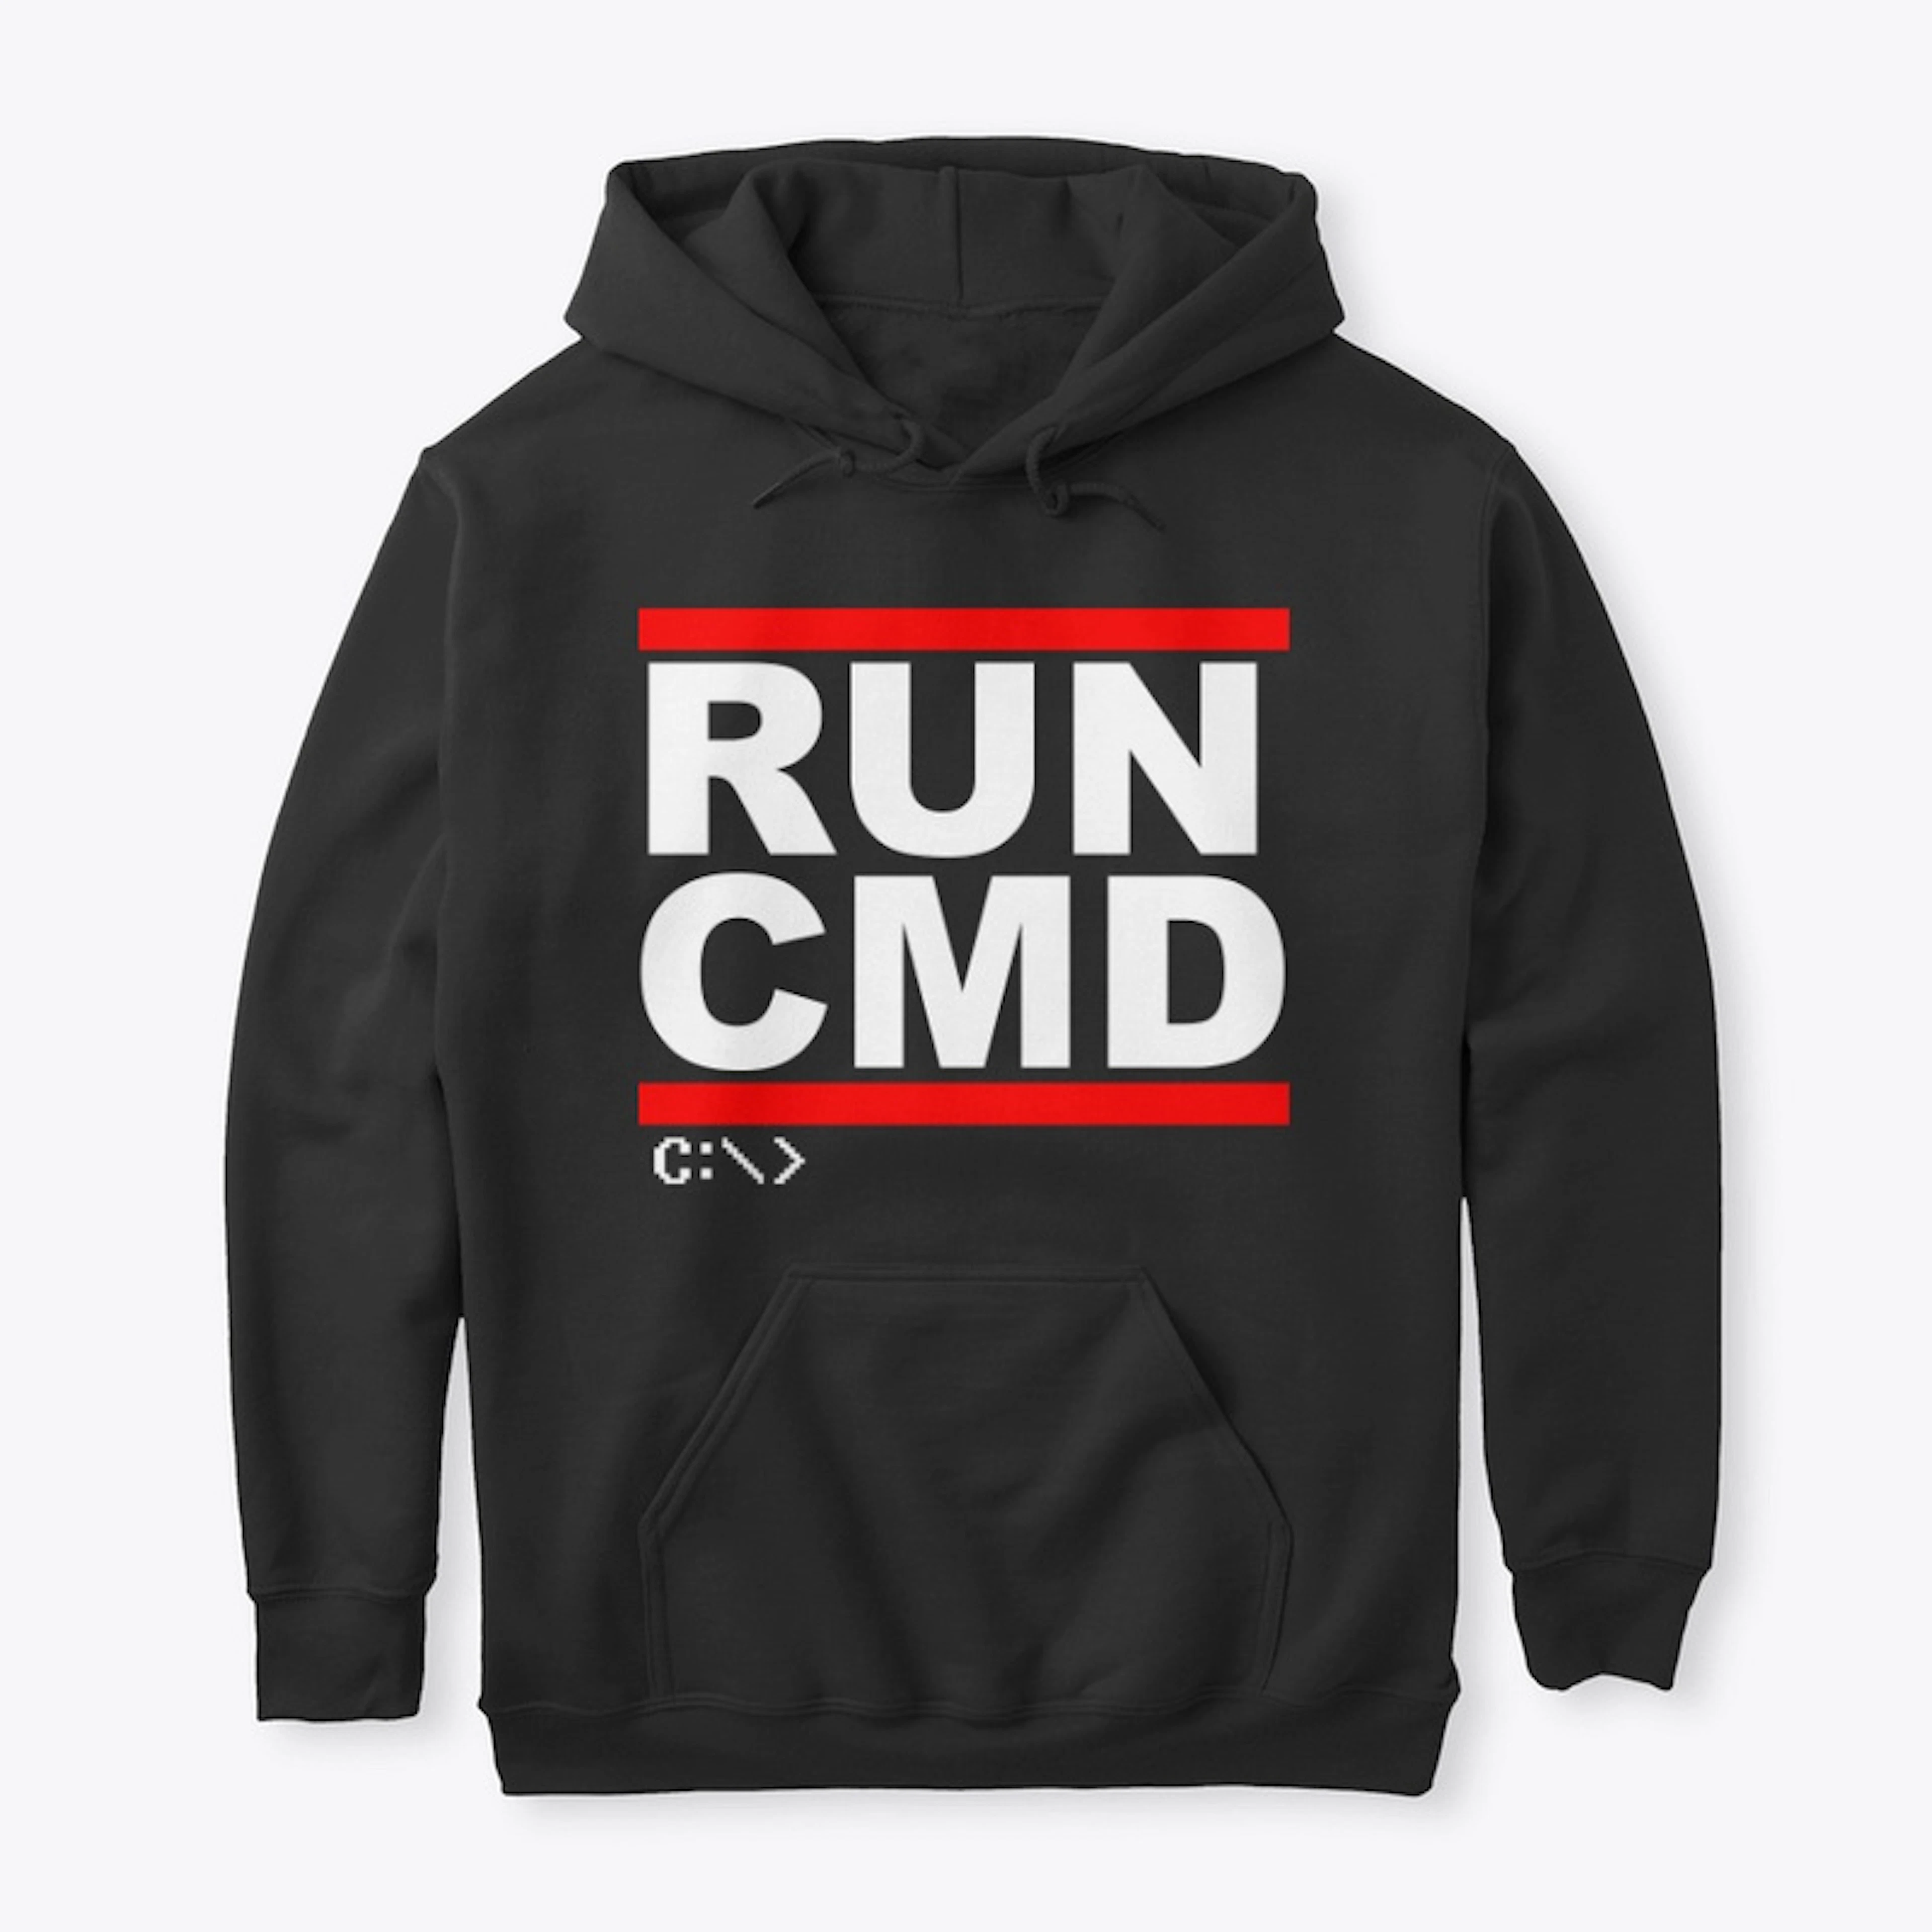 Run CMD Hoodie